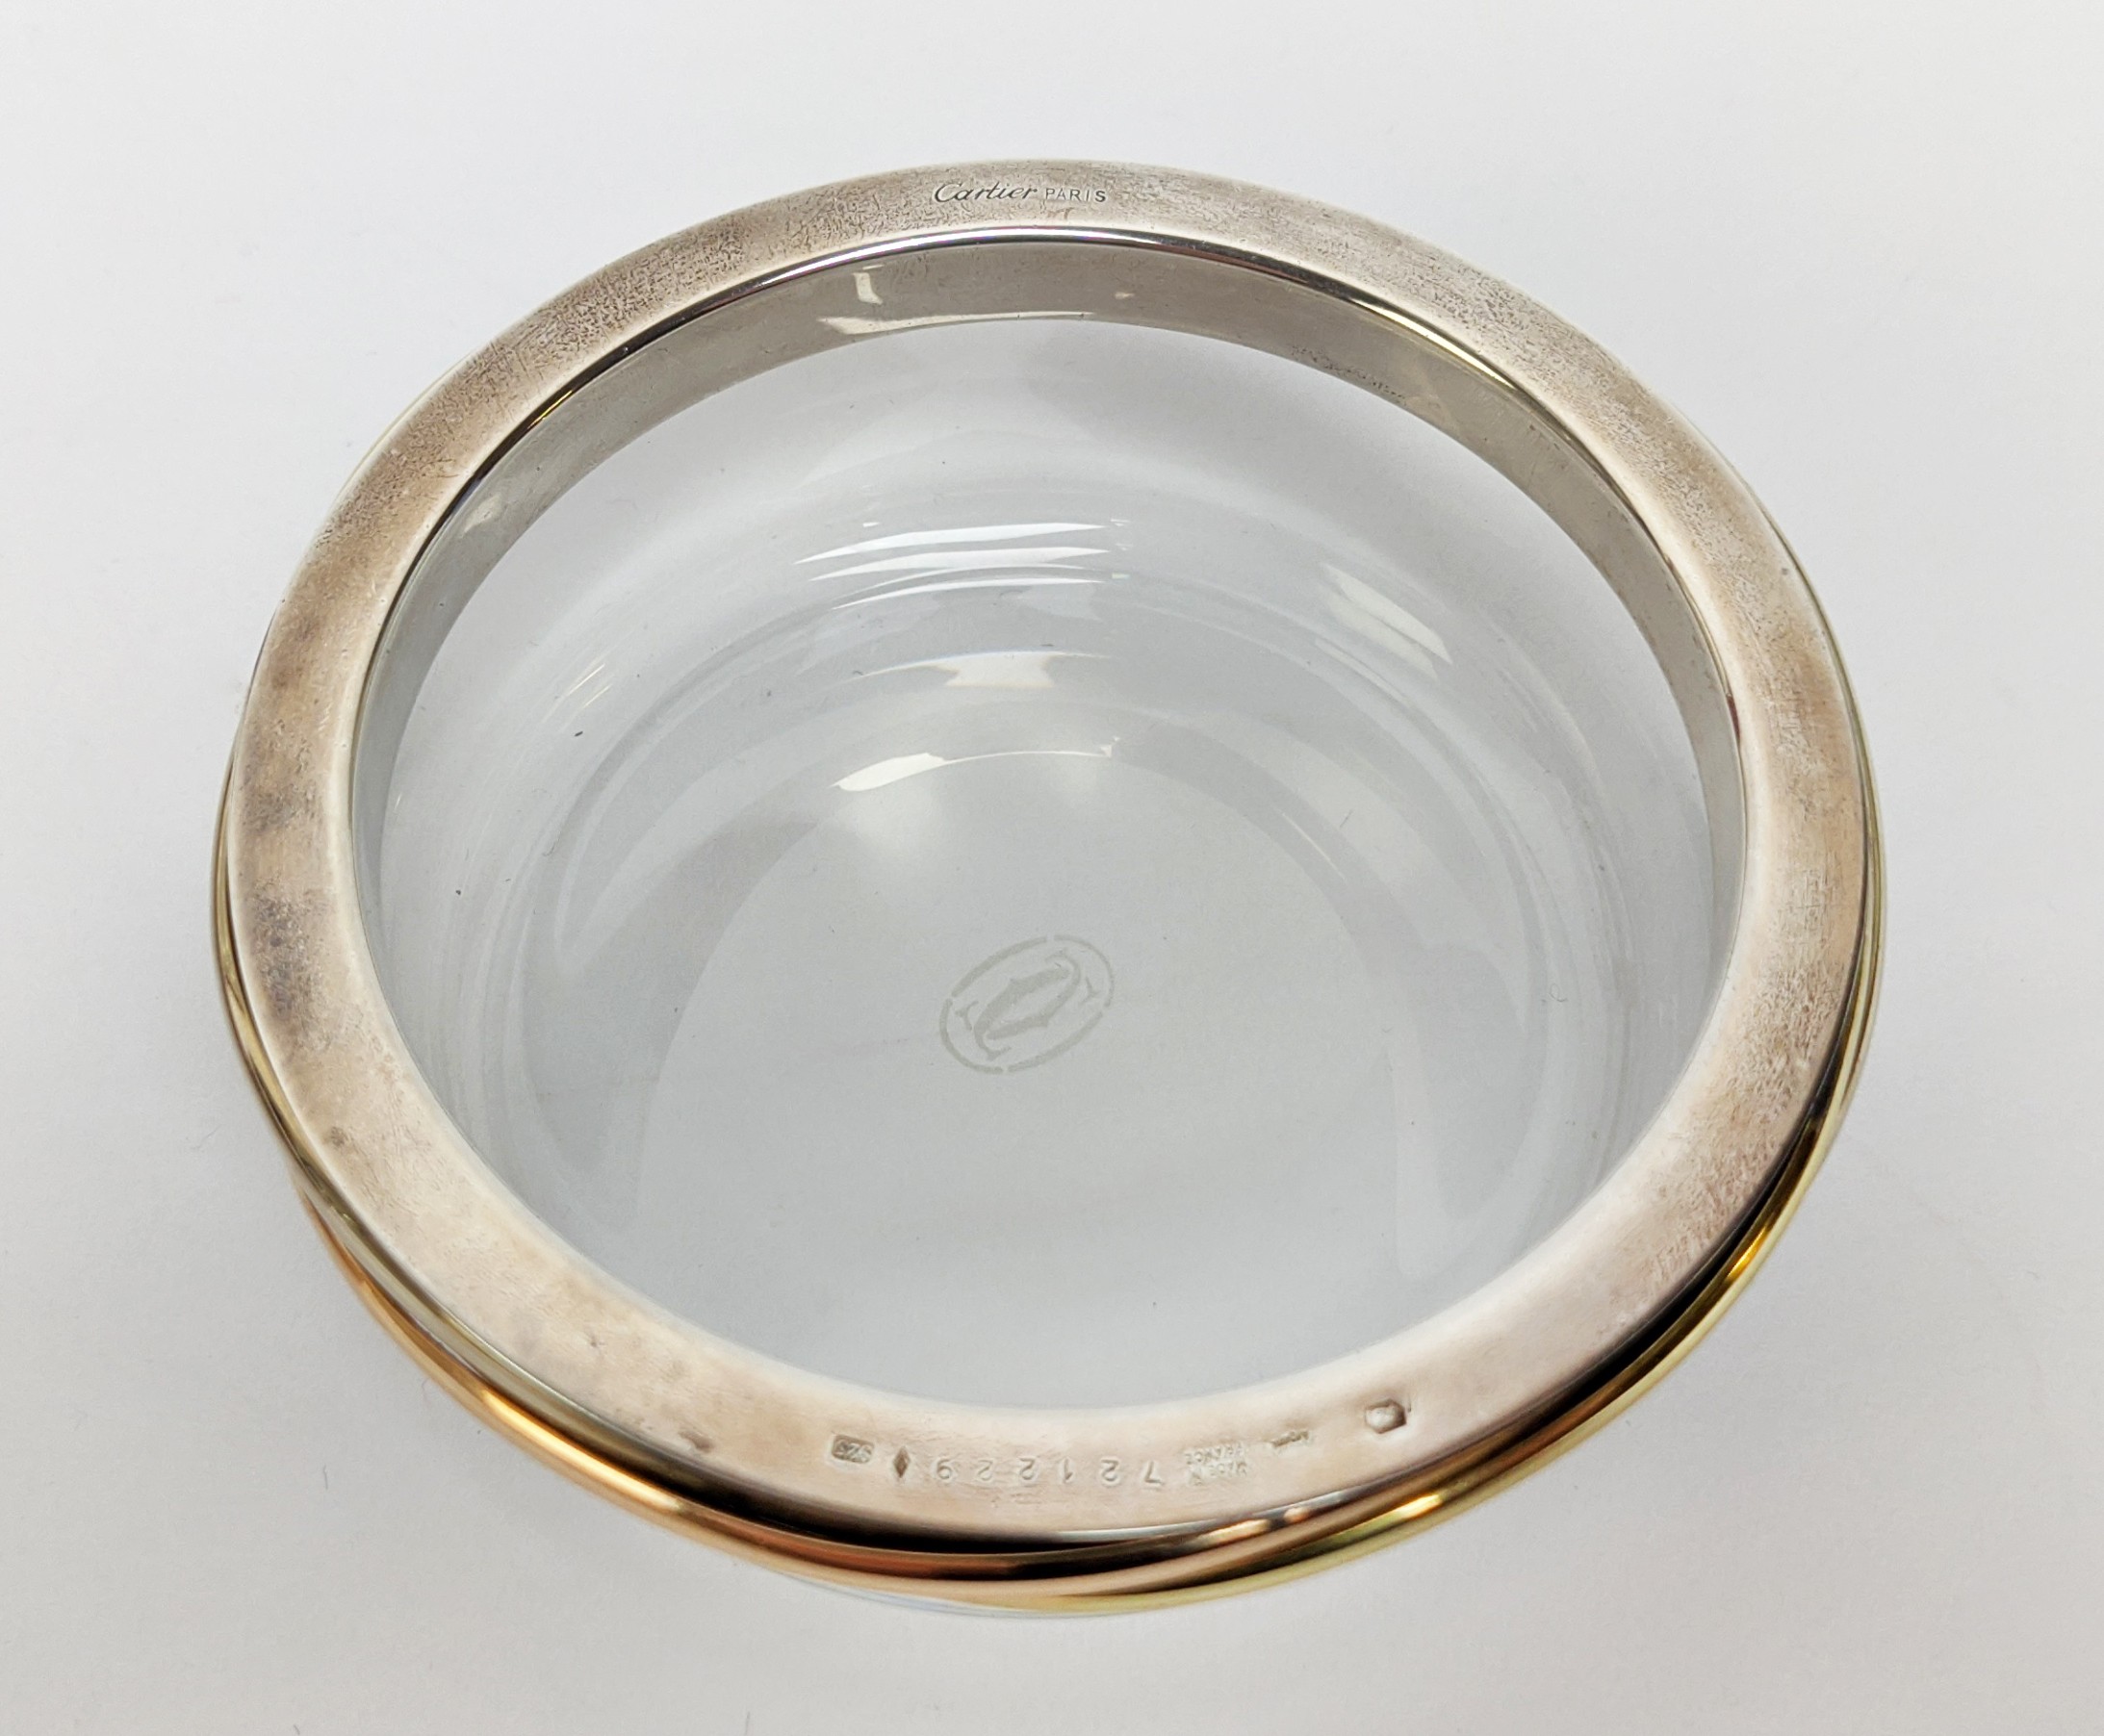 A CARTIER GLASS AND SILVER RIM CONDIMENT BOWL, complete with original box, 10cm diam. - Image 7 of 16